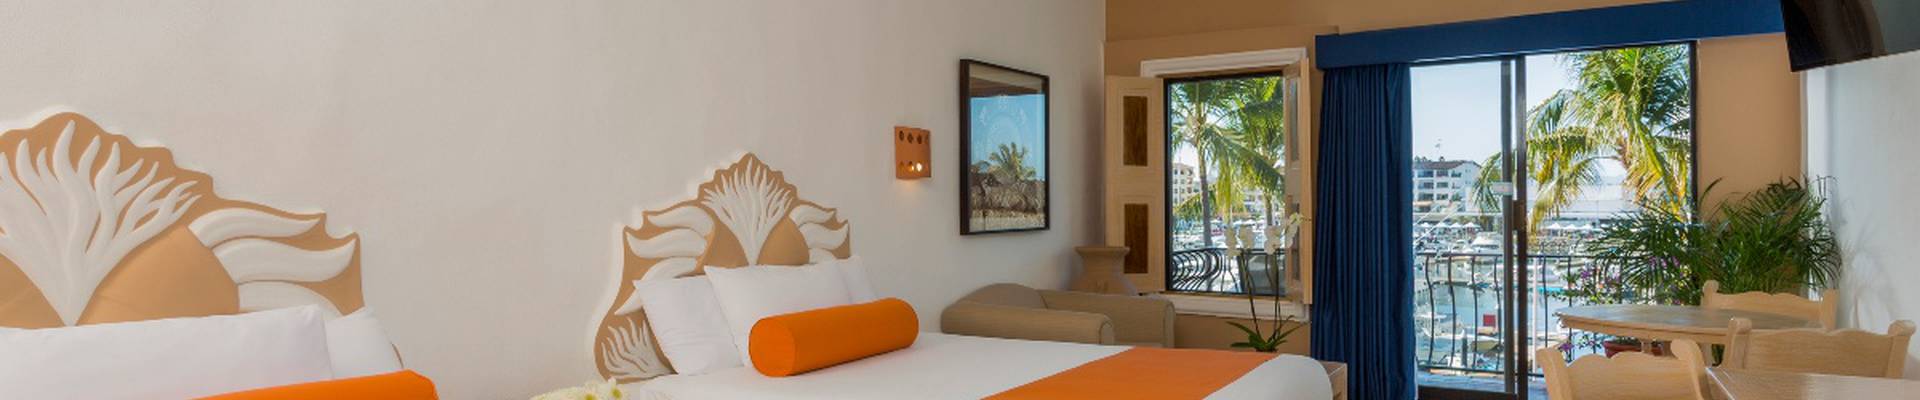 Flamingo Hotels - Puerto Vallarta - 